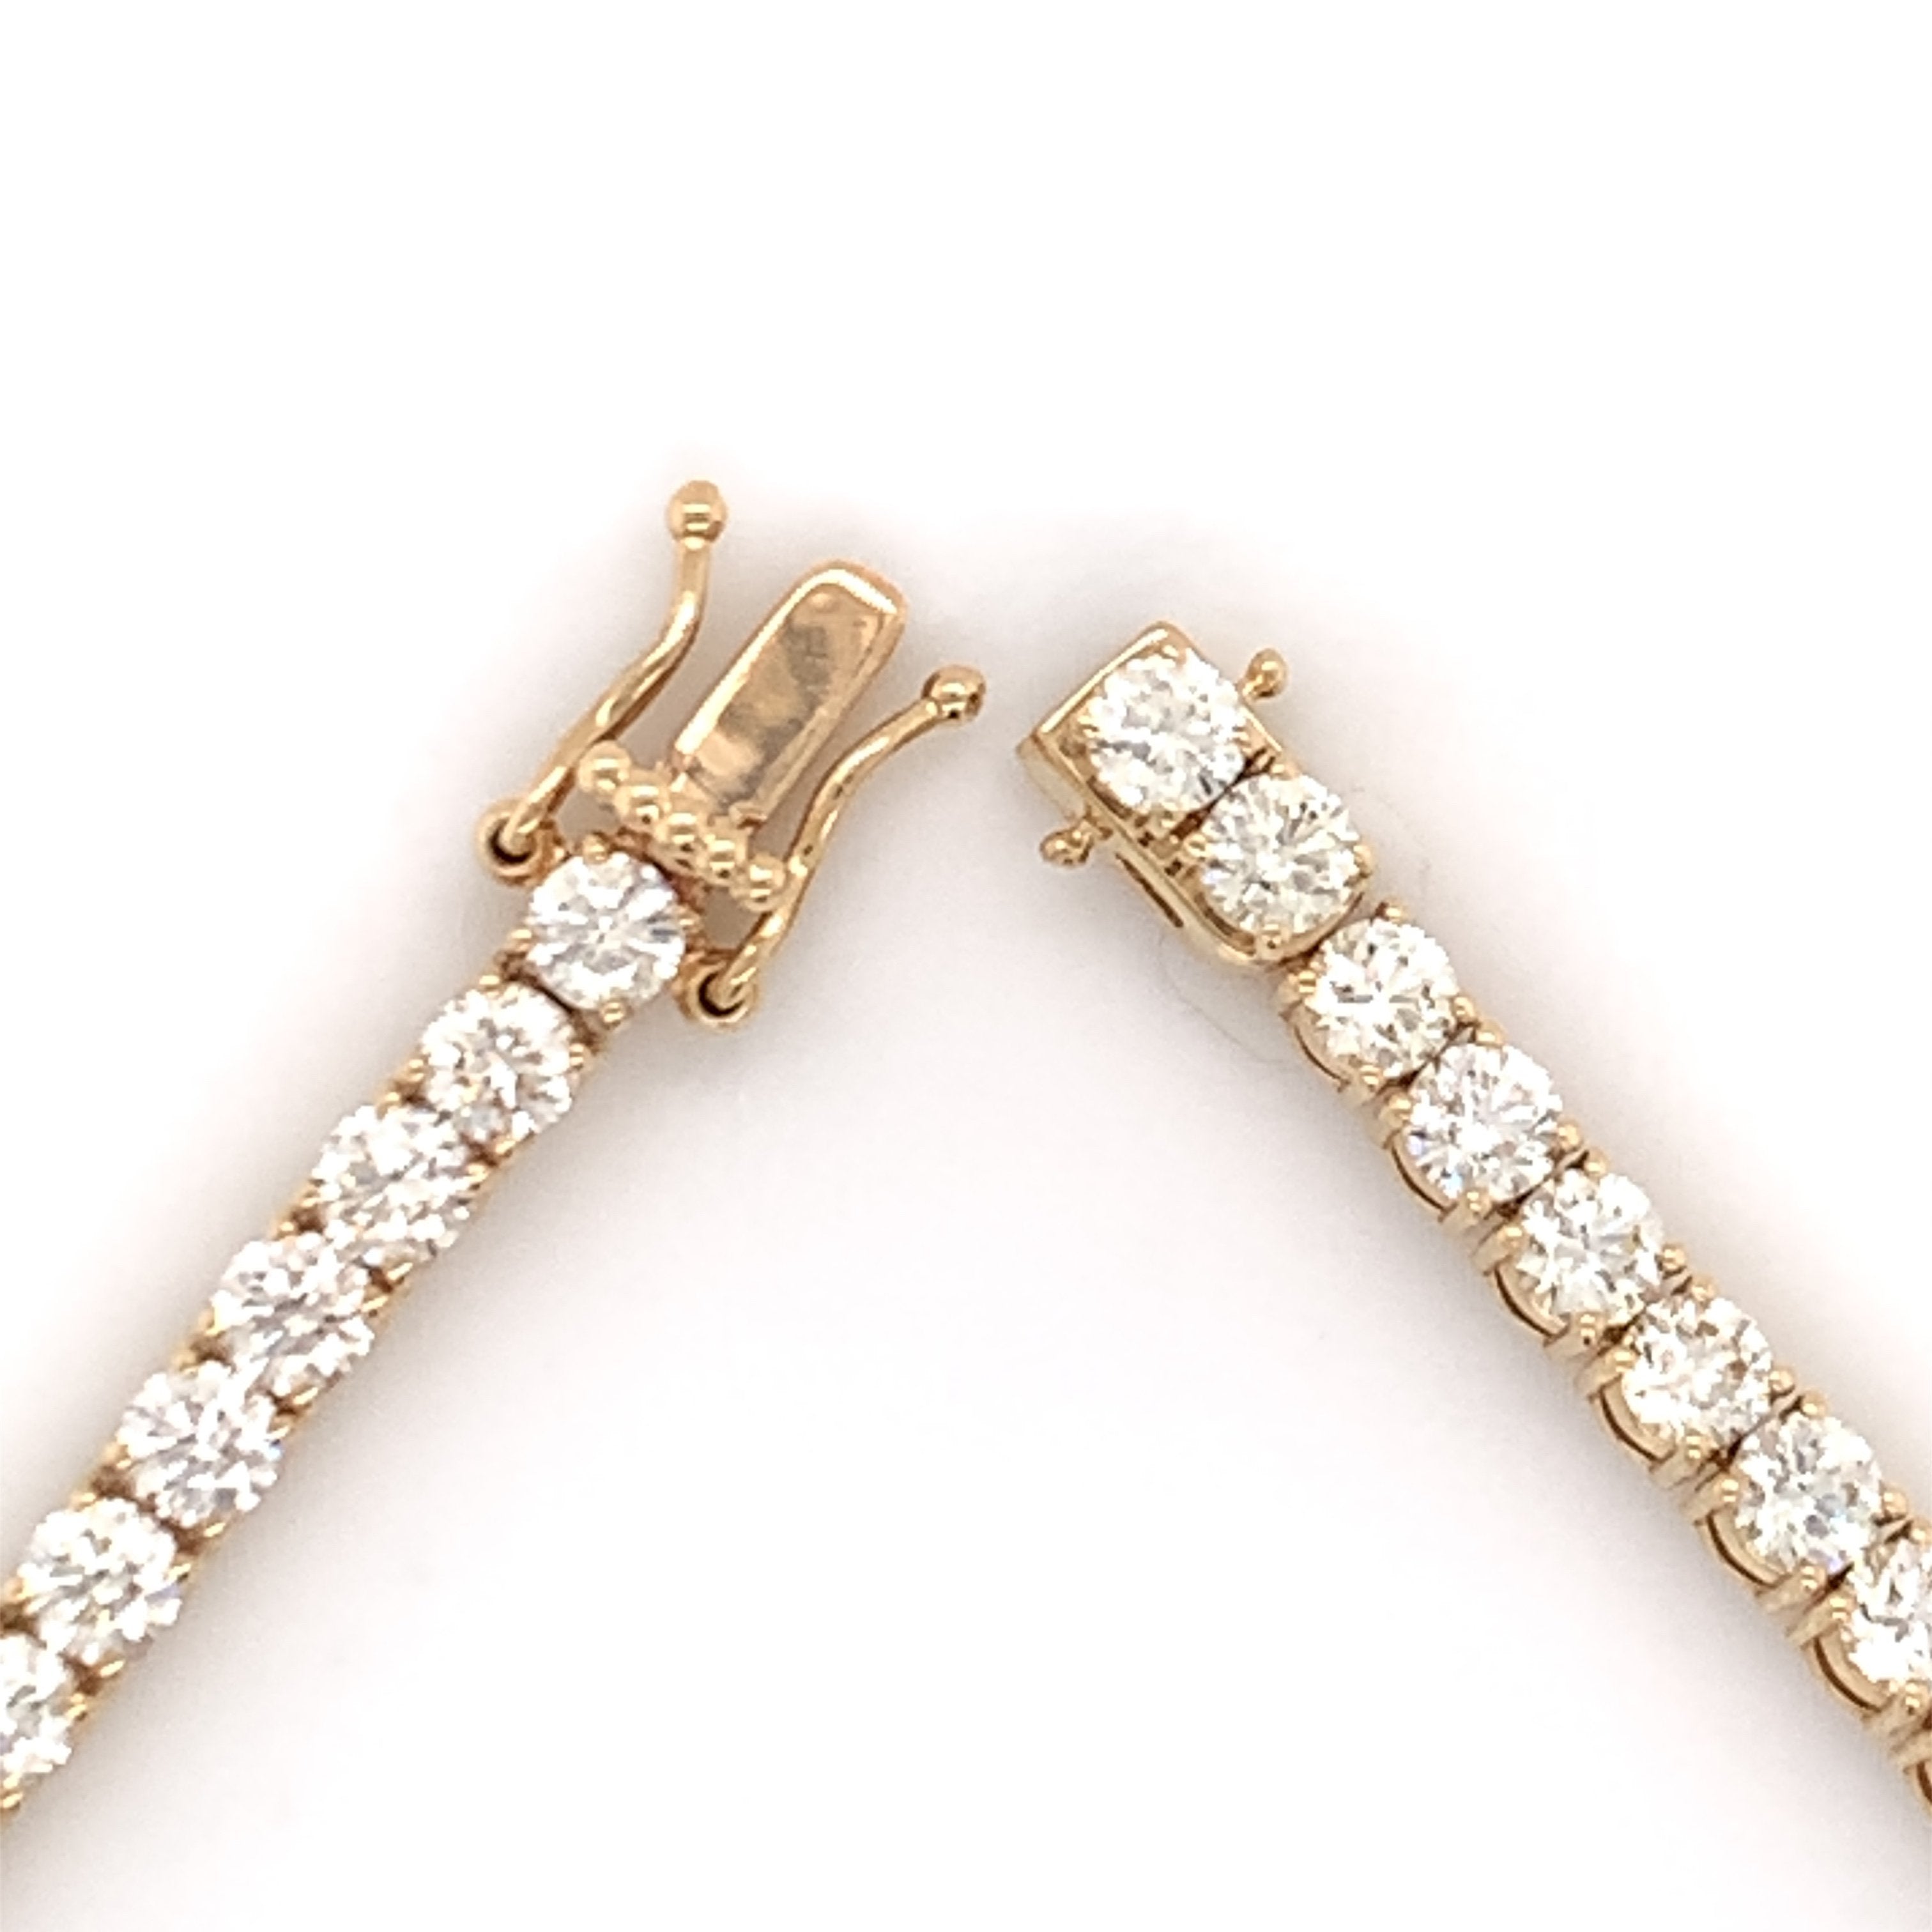 4.50 CT. Diamond Tennis Bracelet in Gold - White Carat - USA & Canada